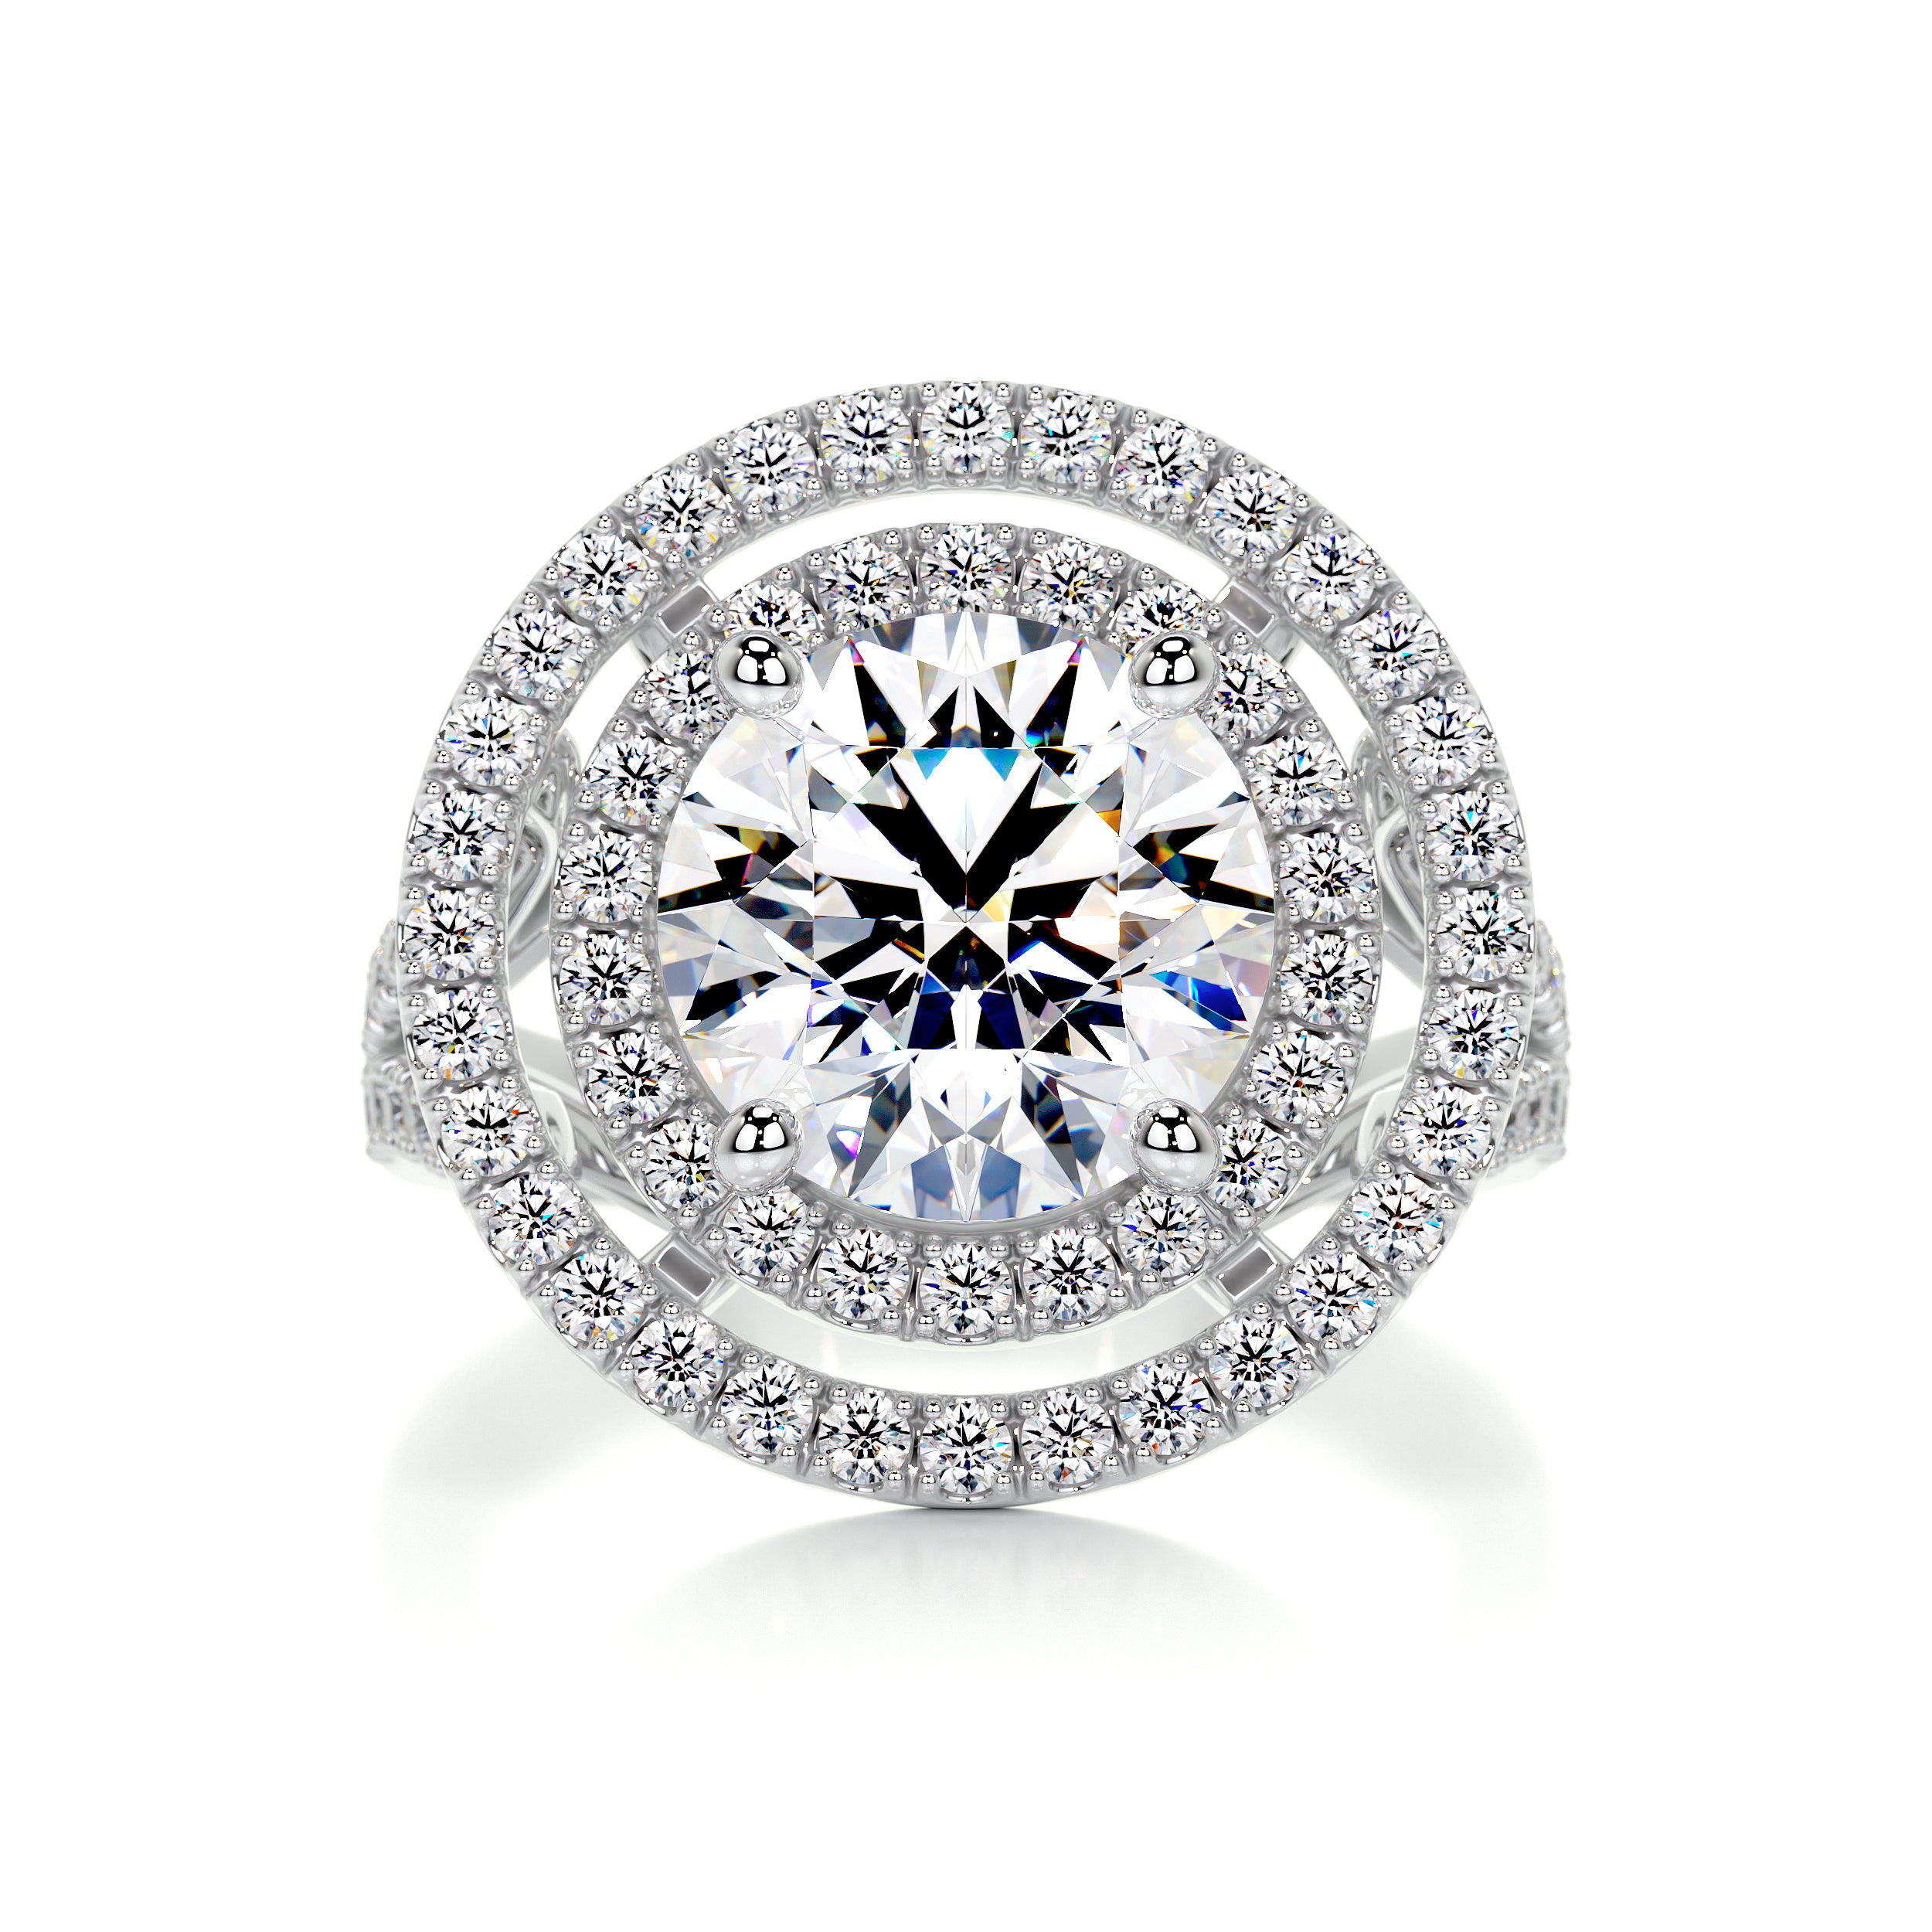 Double Halo Engagement Ring - Donatella – Moissanite Rings